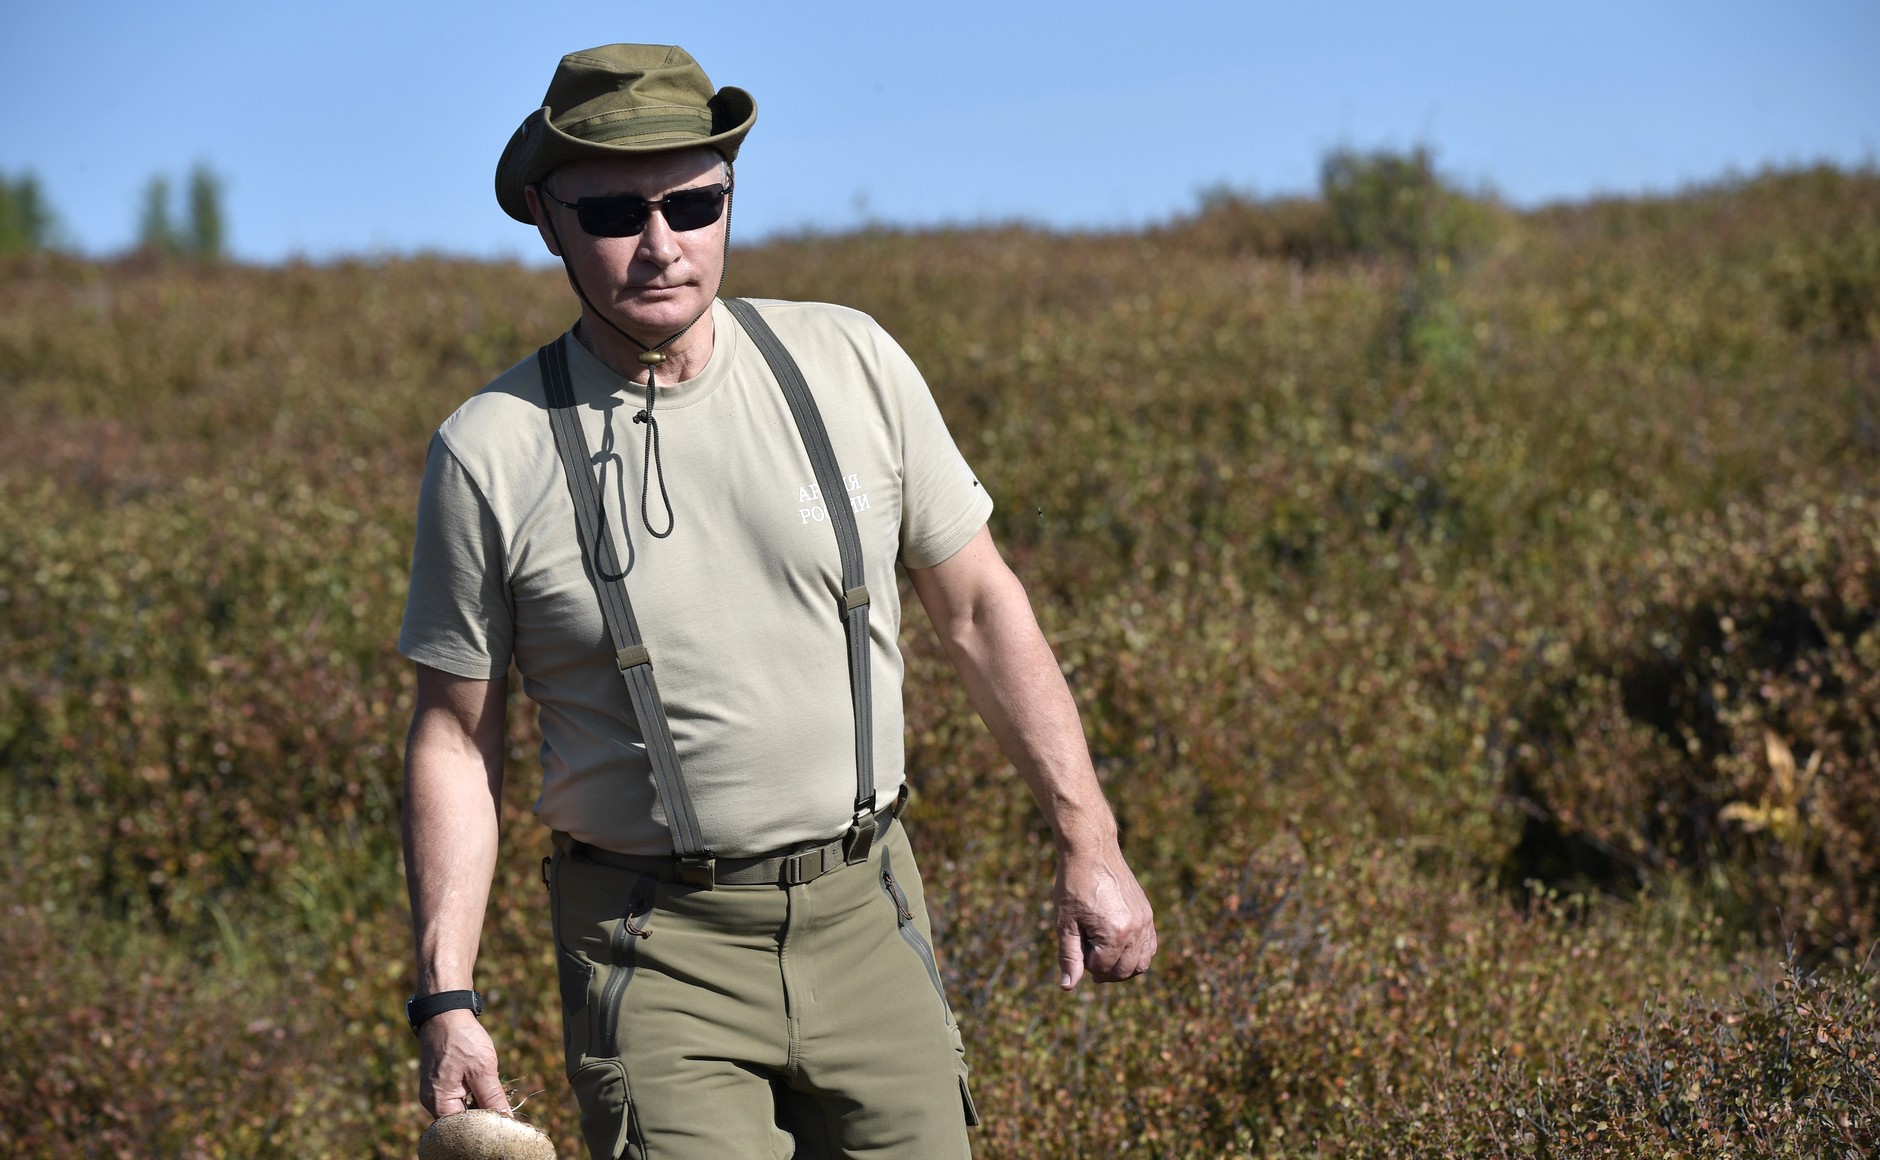 Dailystorm - Появились фото и видео с отдыха Путина в горах